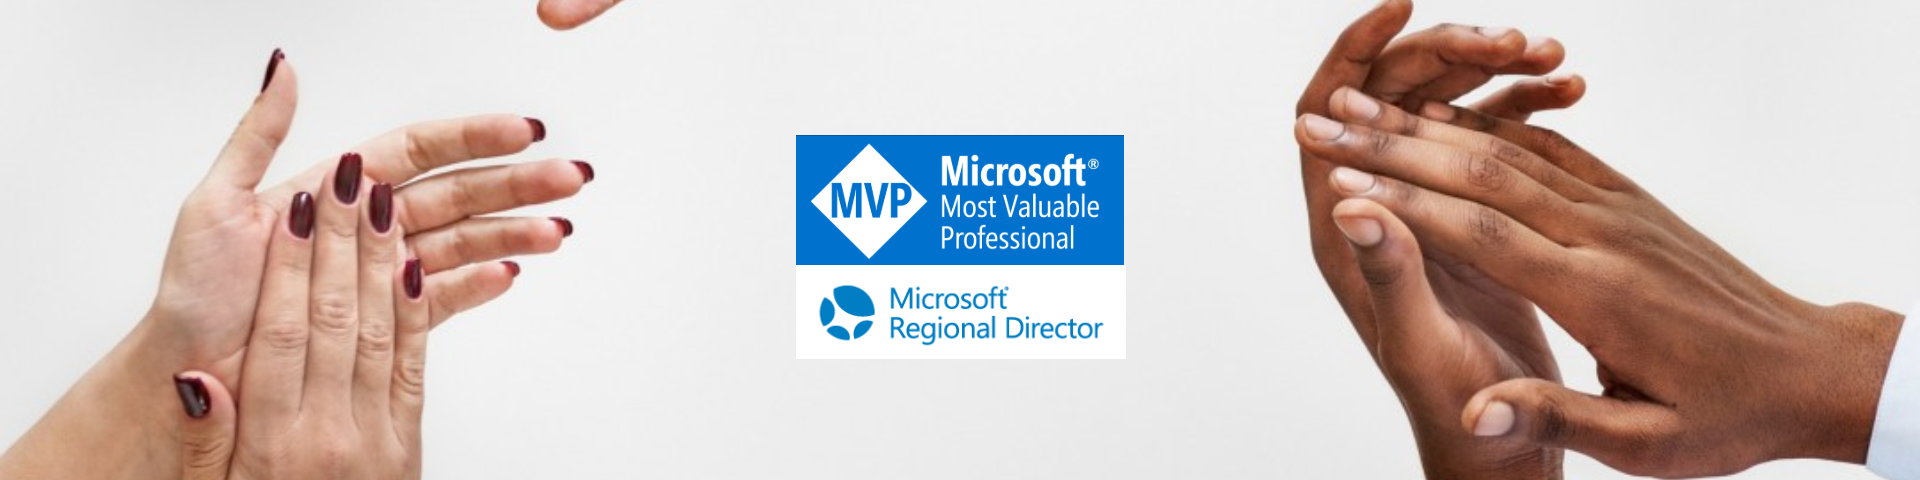 Microsoft MVP and Microsoft Regional Director